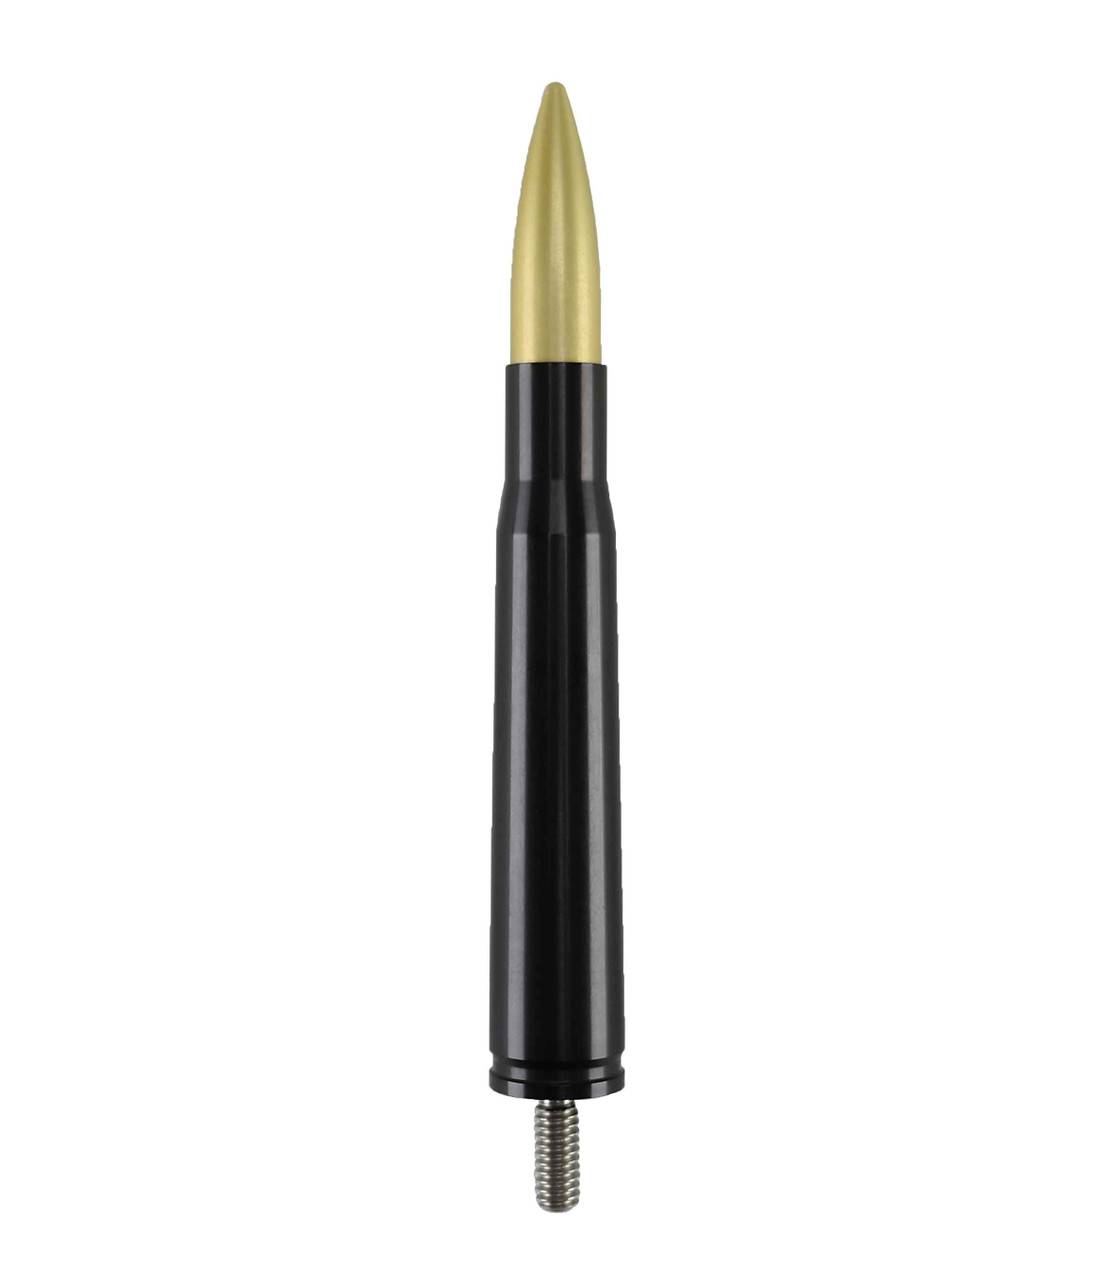 GOLD 50 Caliber Bullet Aluminum Antenna - Part Number A435-GOLD-CB - Made in USA